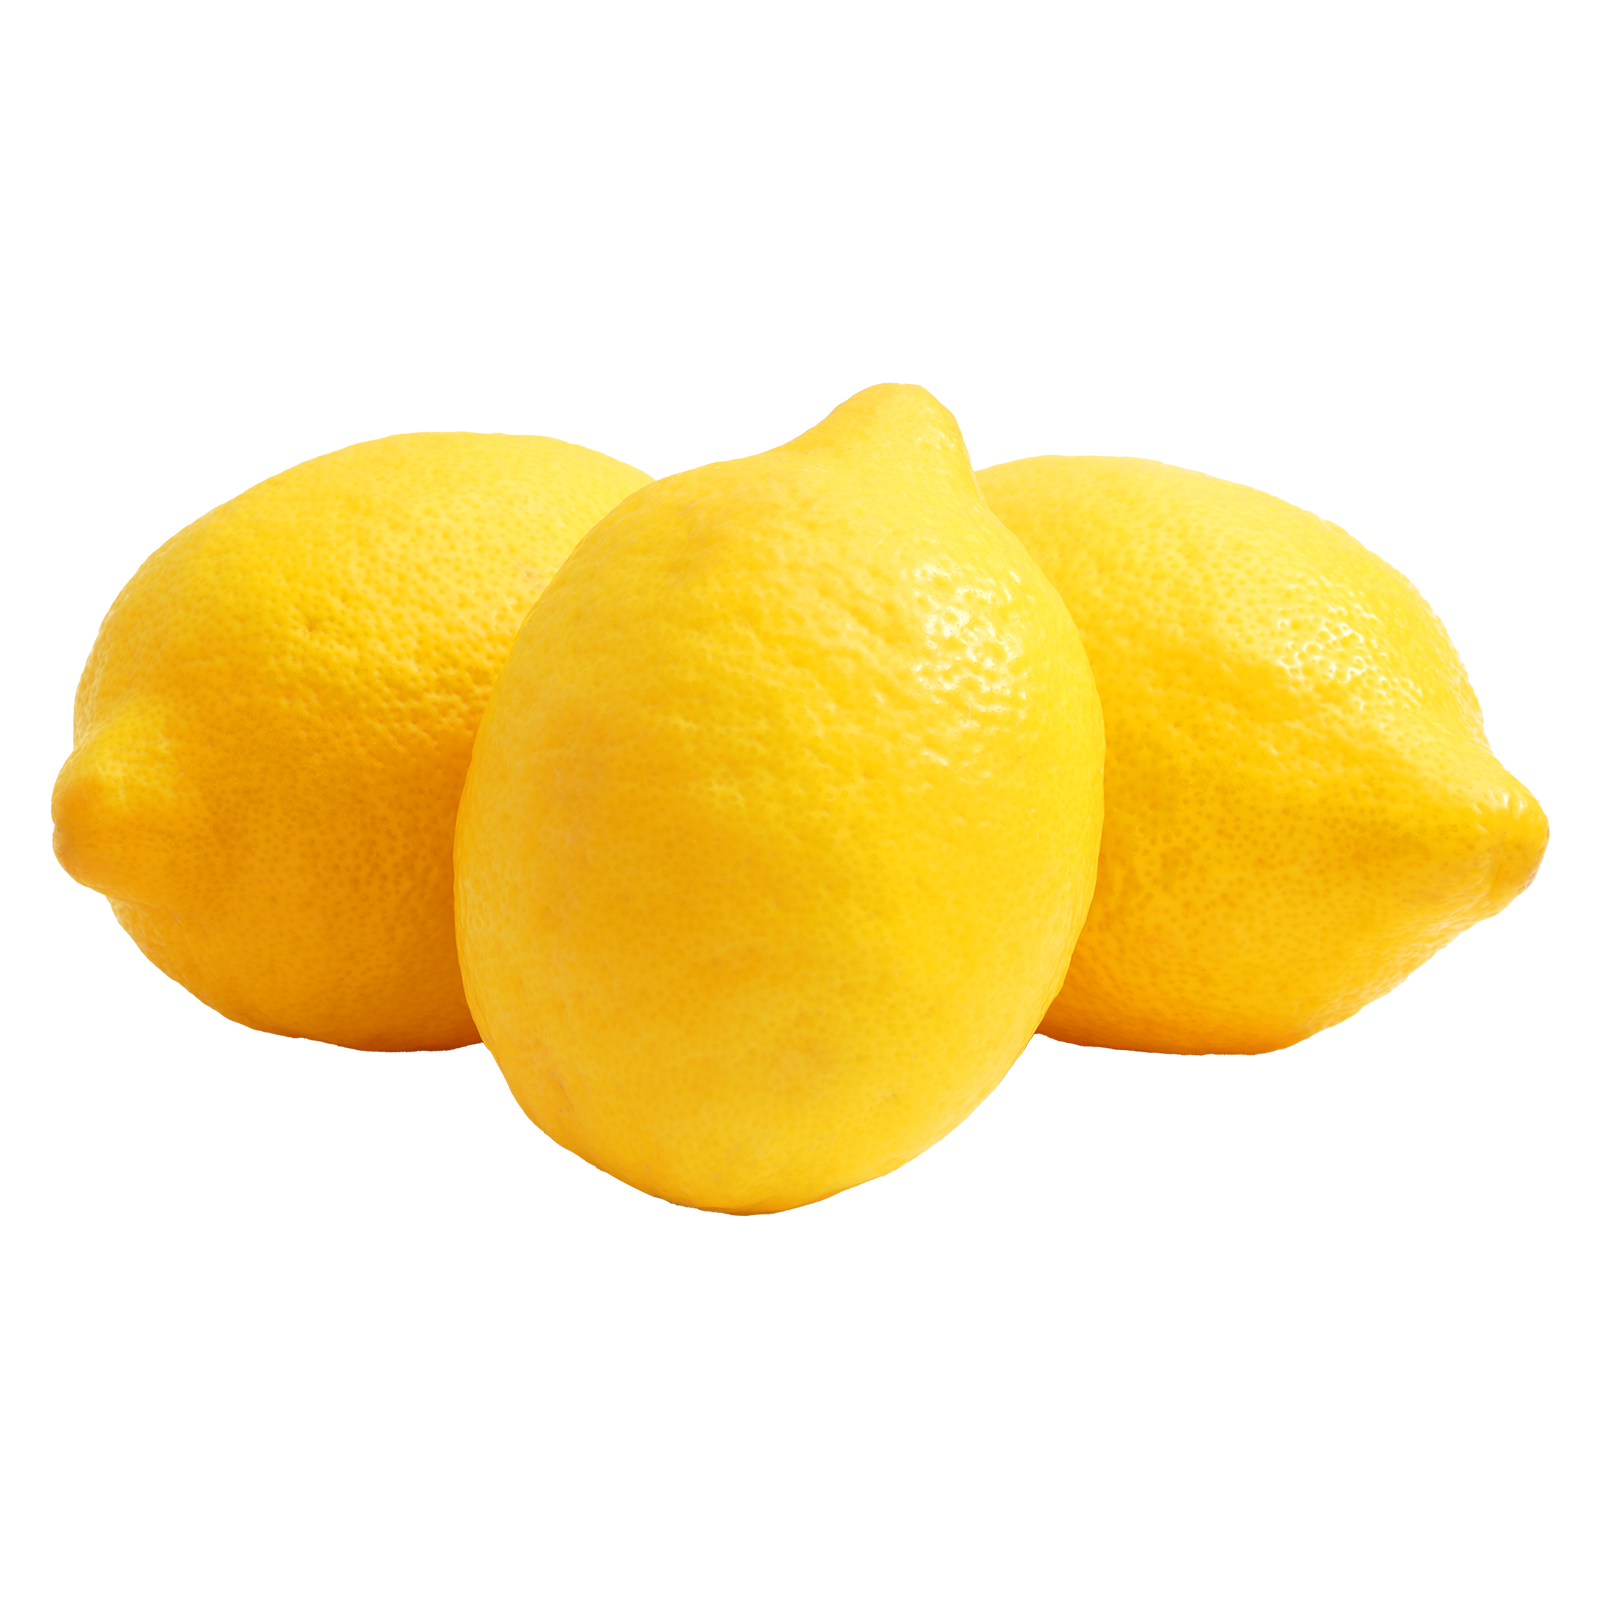 Lemons - 3ct